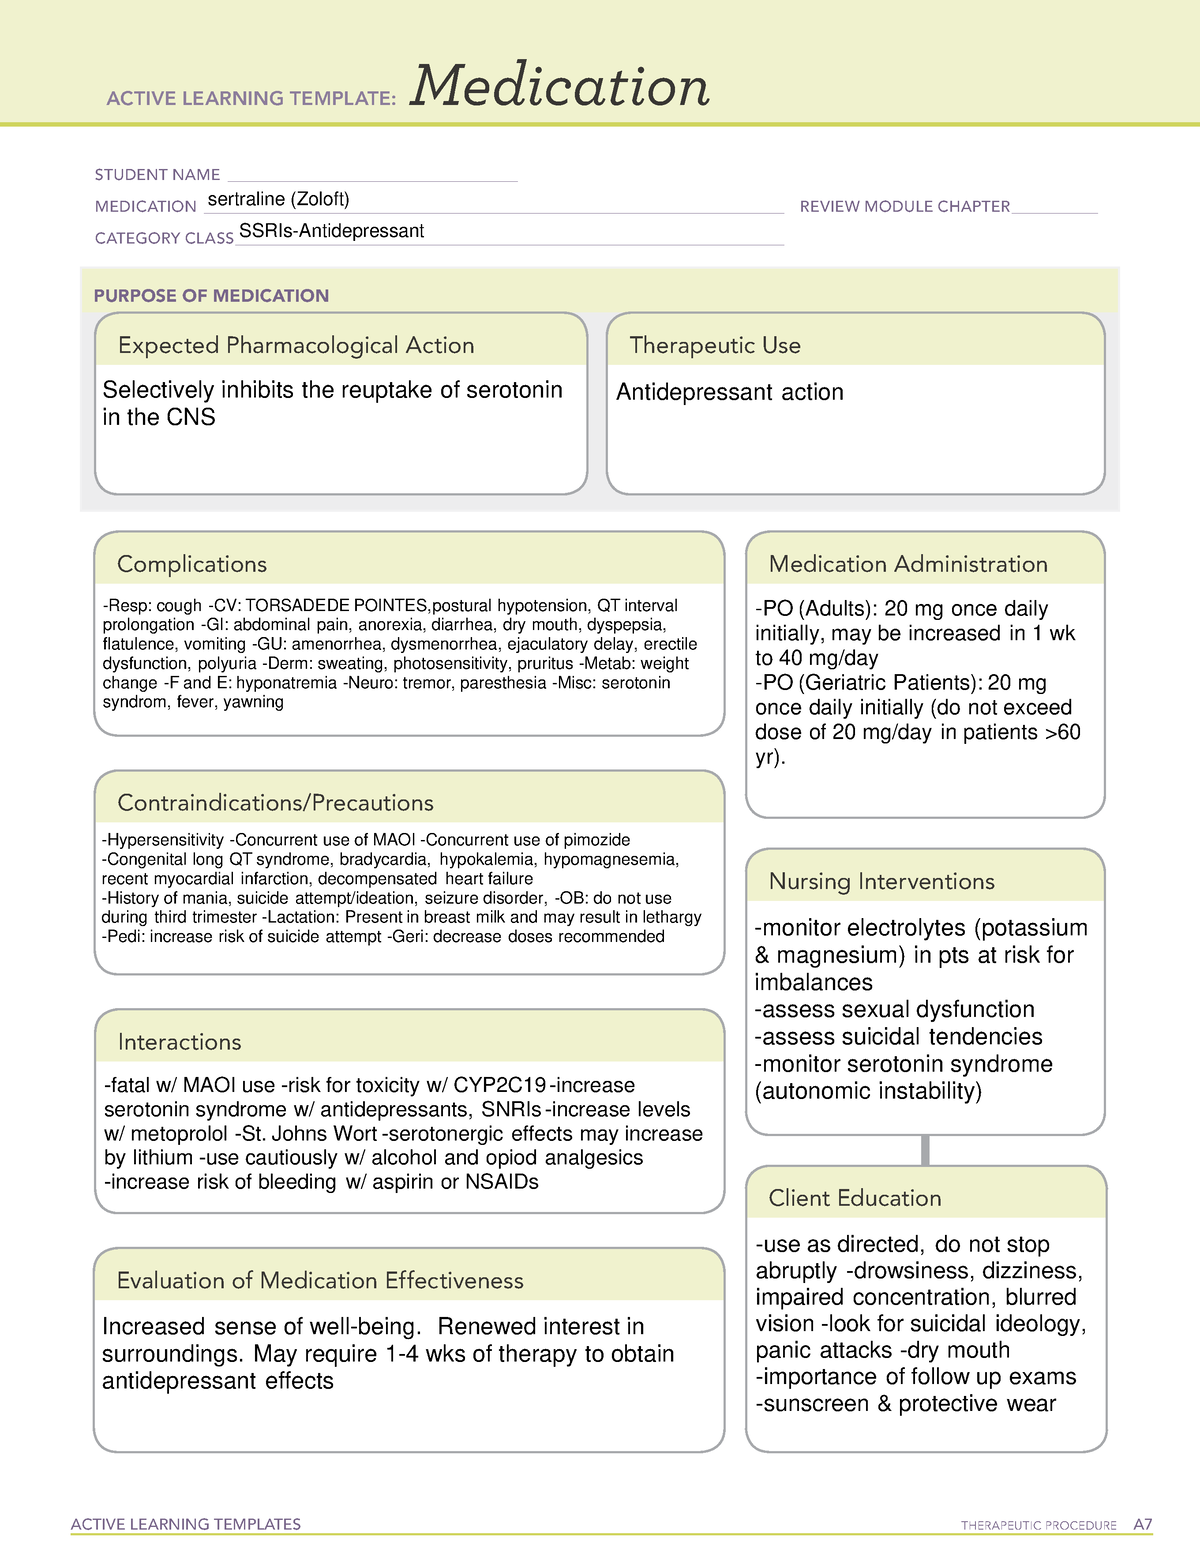 sertraline-zoloft-medication-ati-template-active-learning-templates